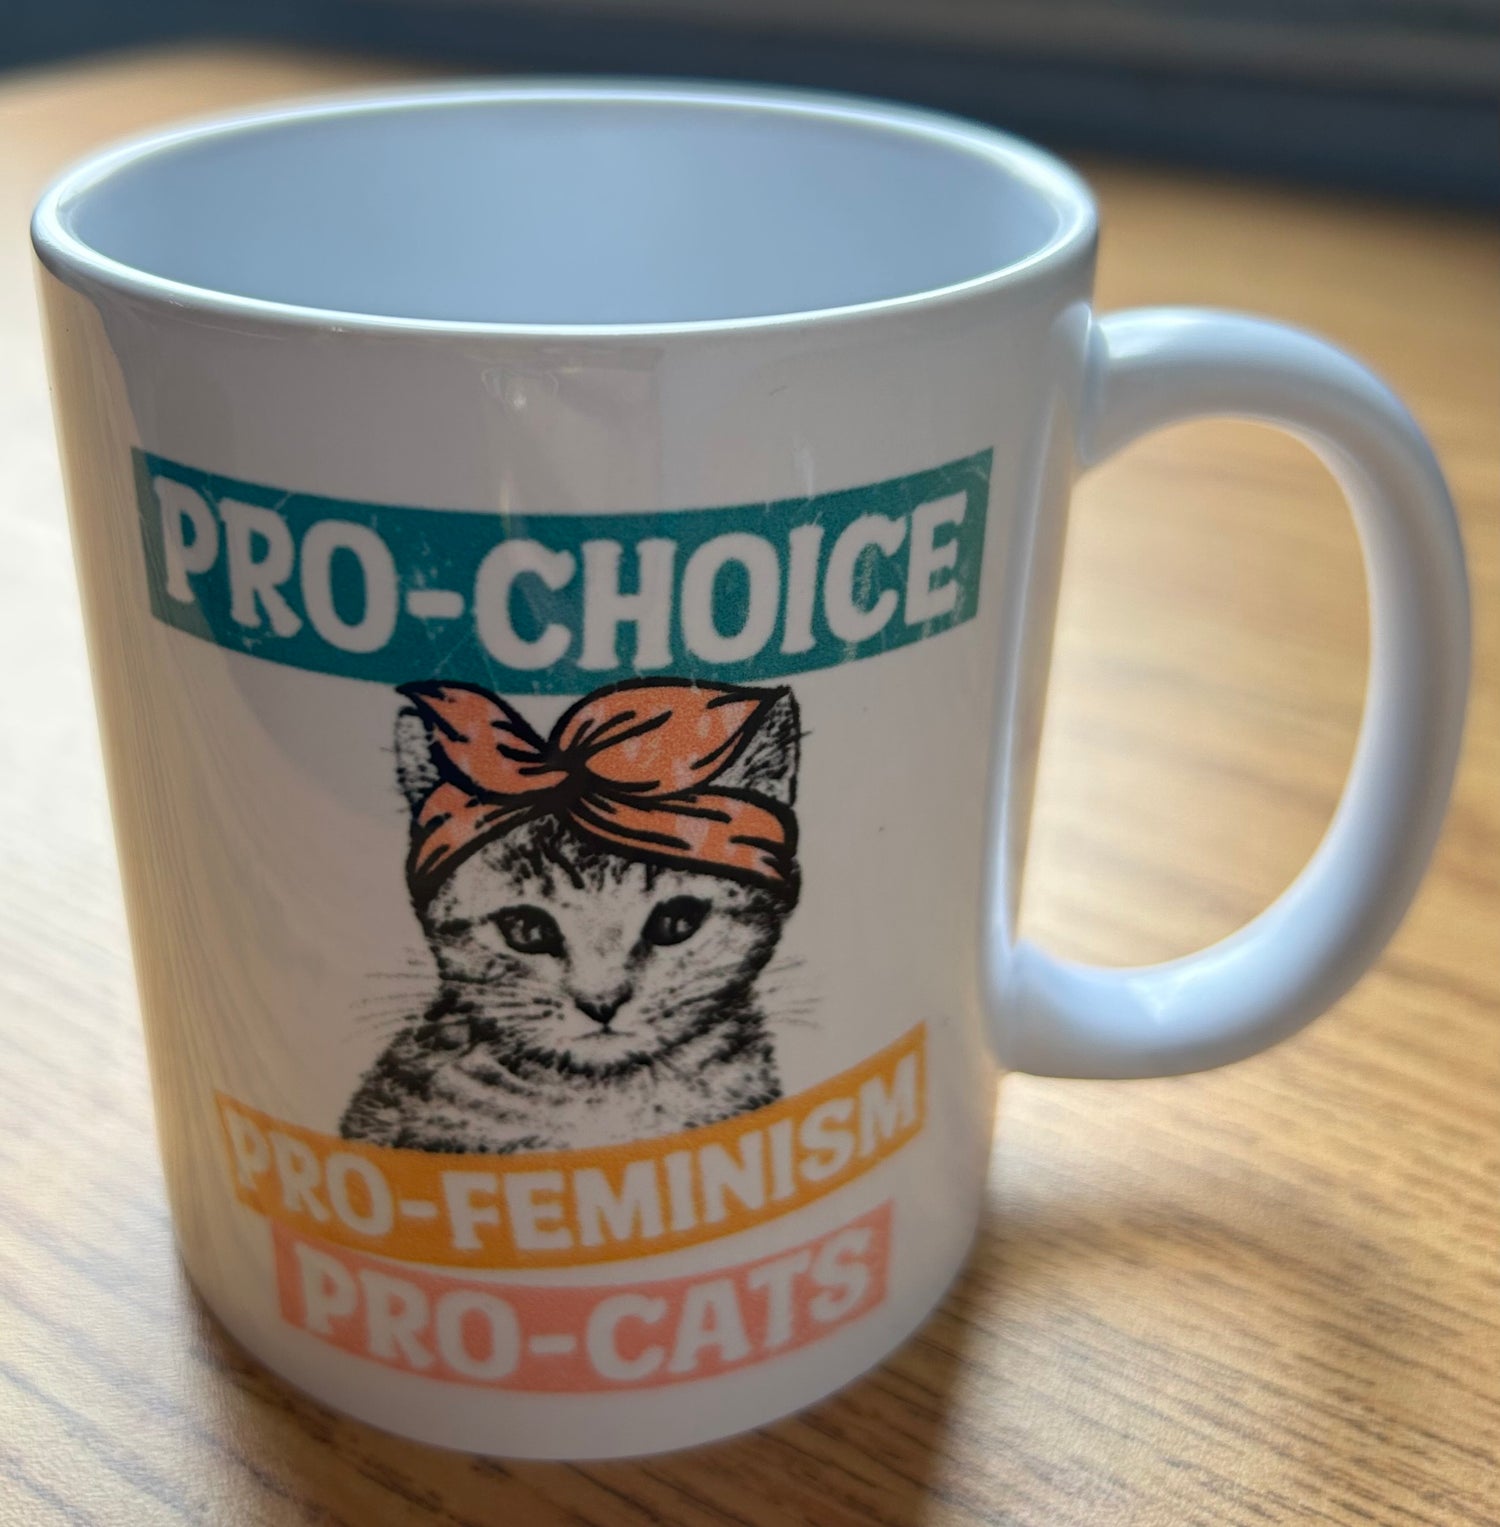 Pro-Choice, Pro-Feminism, Pro-Cats Mug